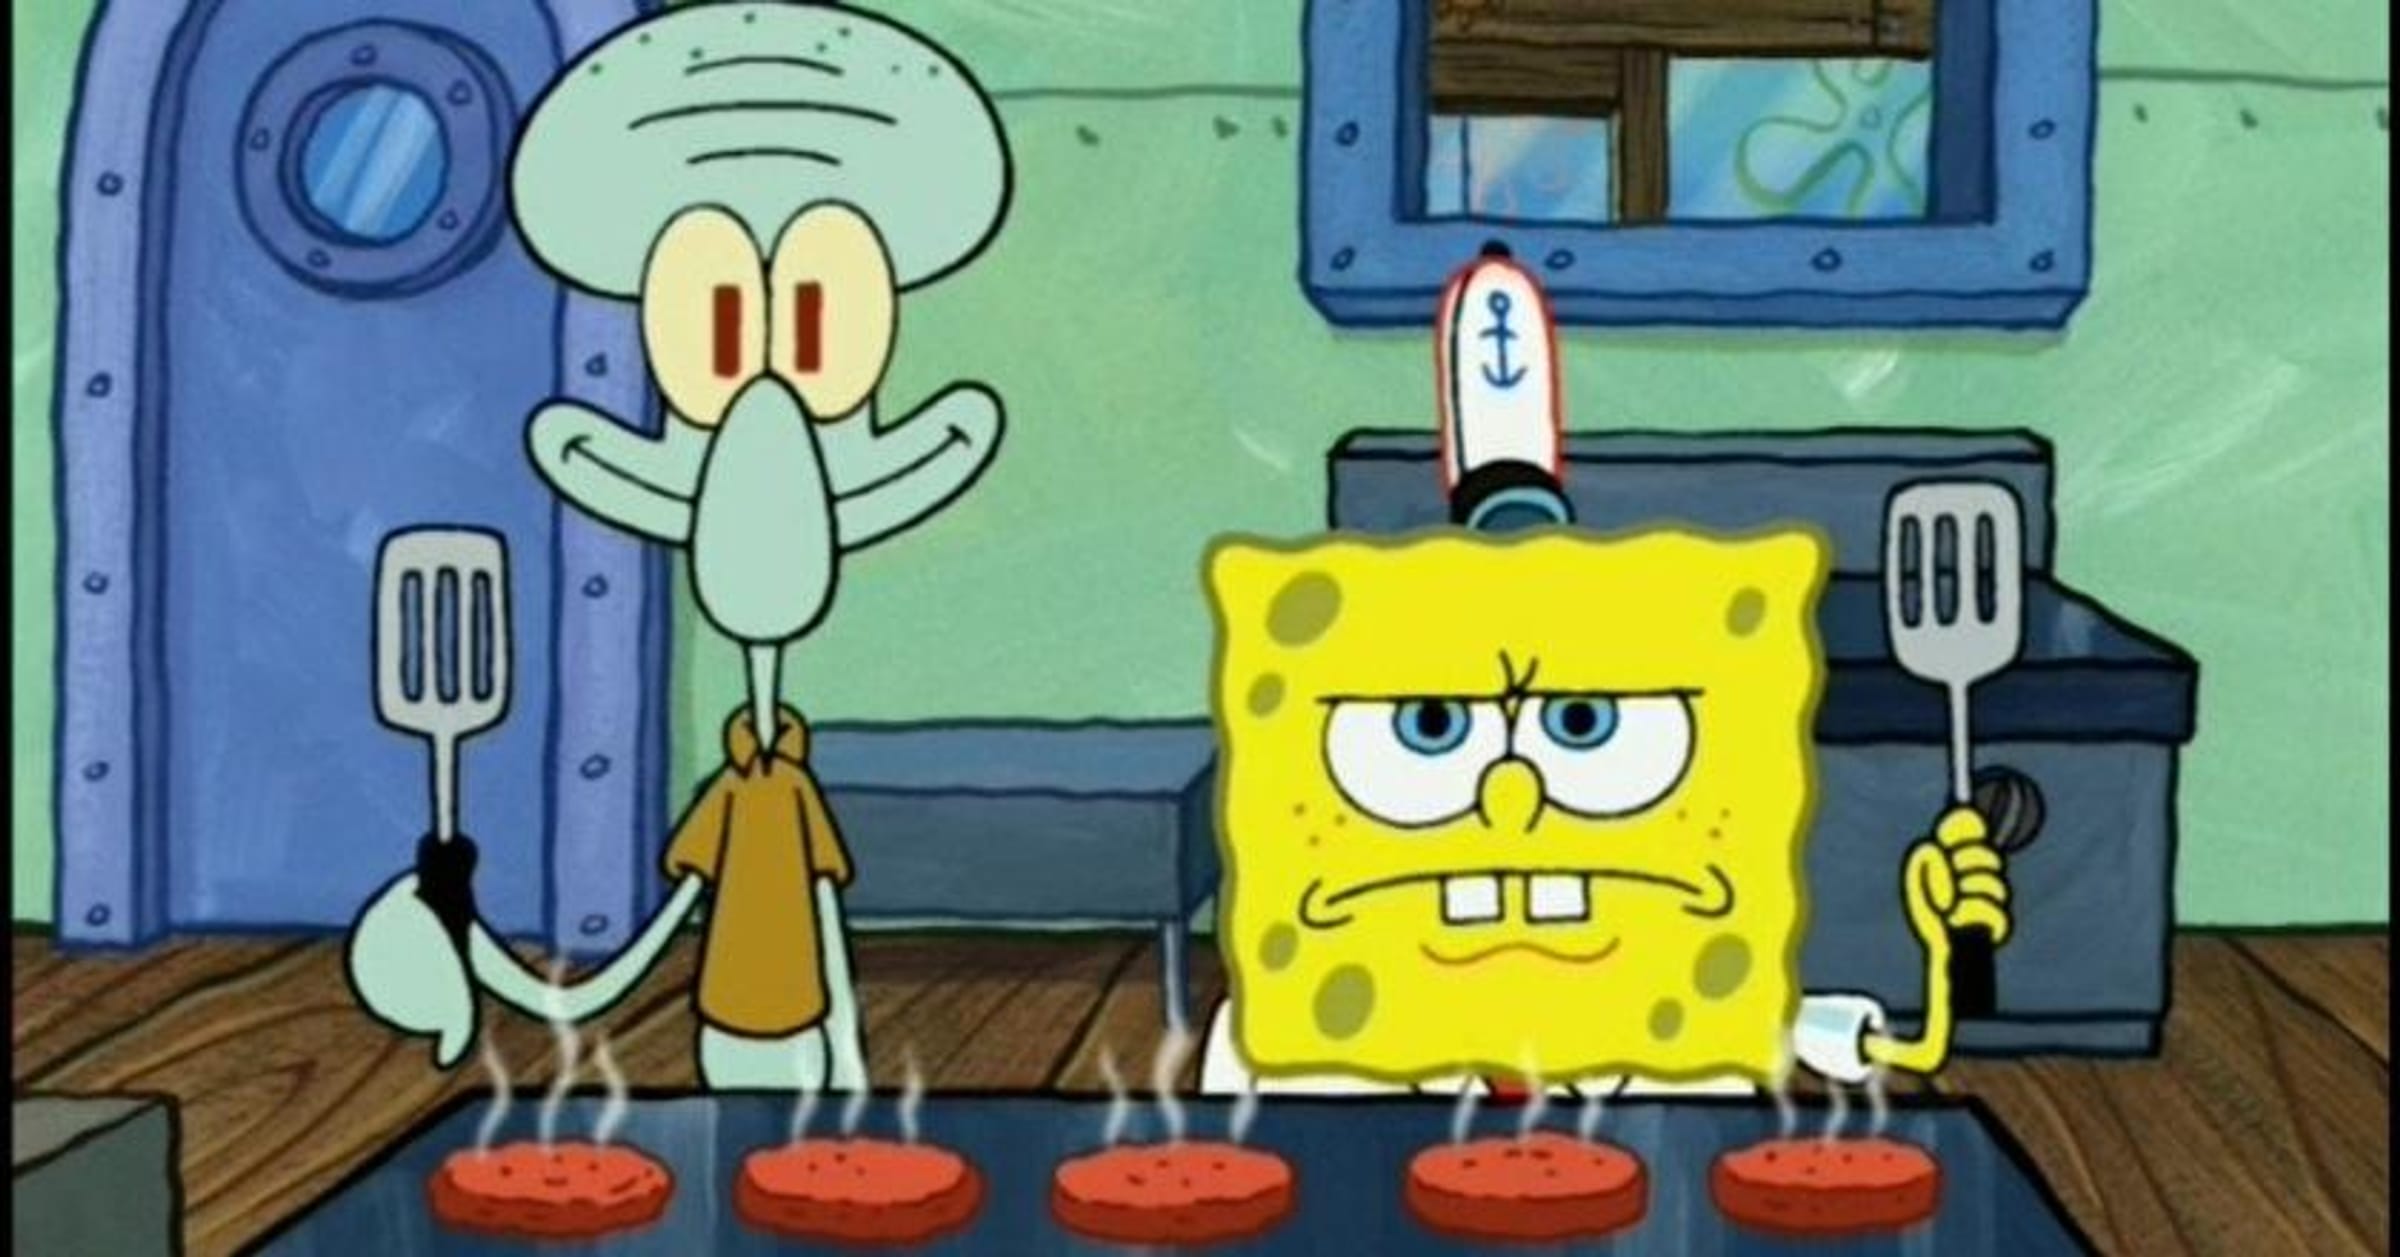 spongebob and squidward together